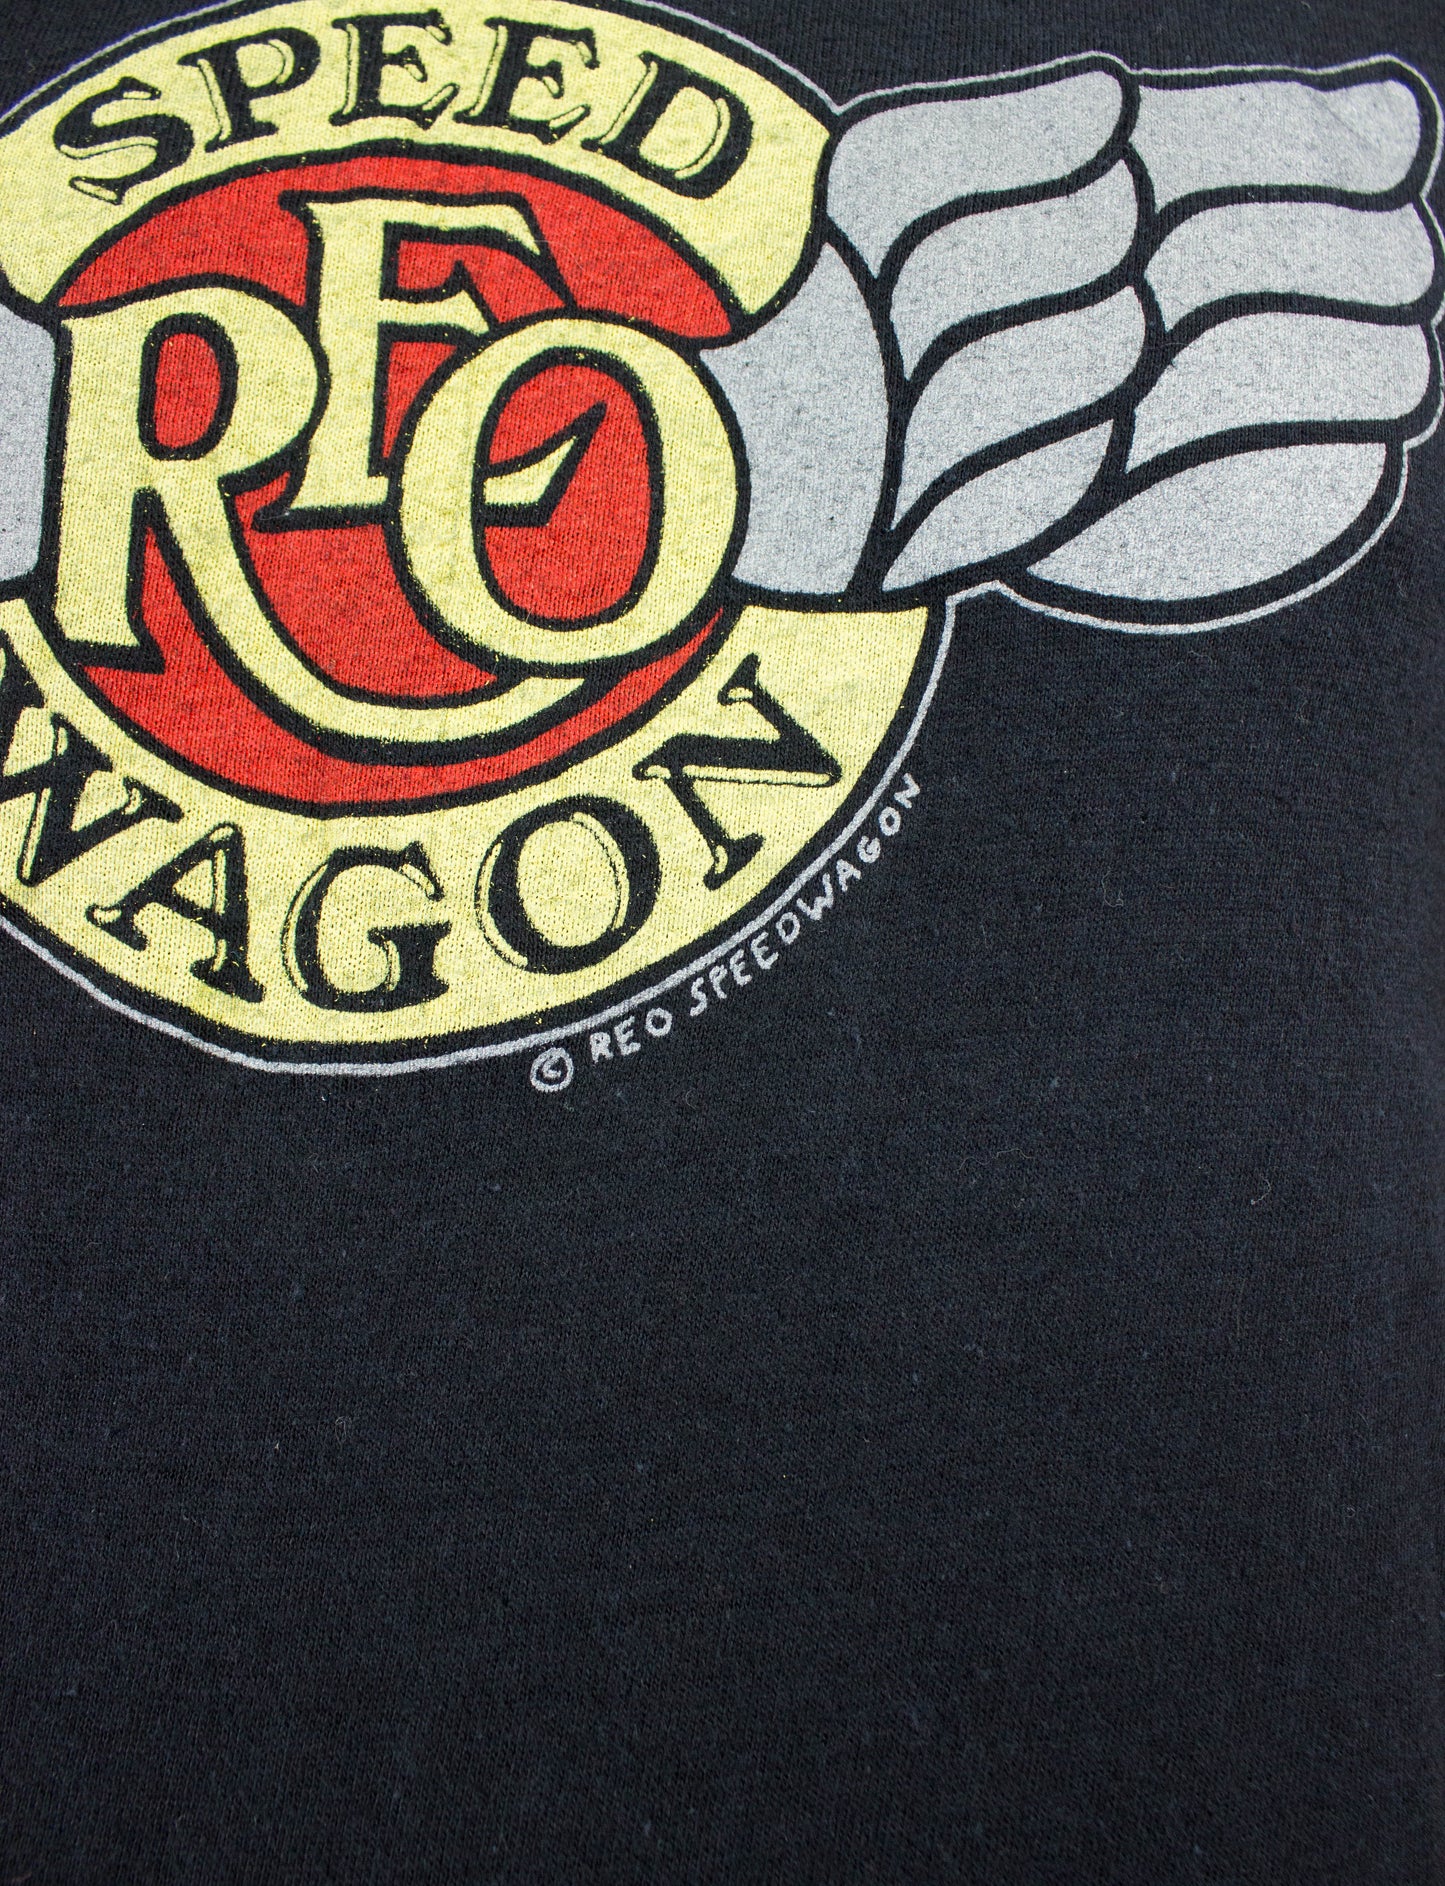 Vintage REO Speedwagon Concert T Shirt 1981 Tour Wing Logo Black Small